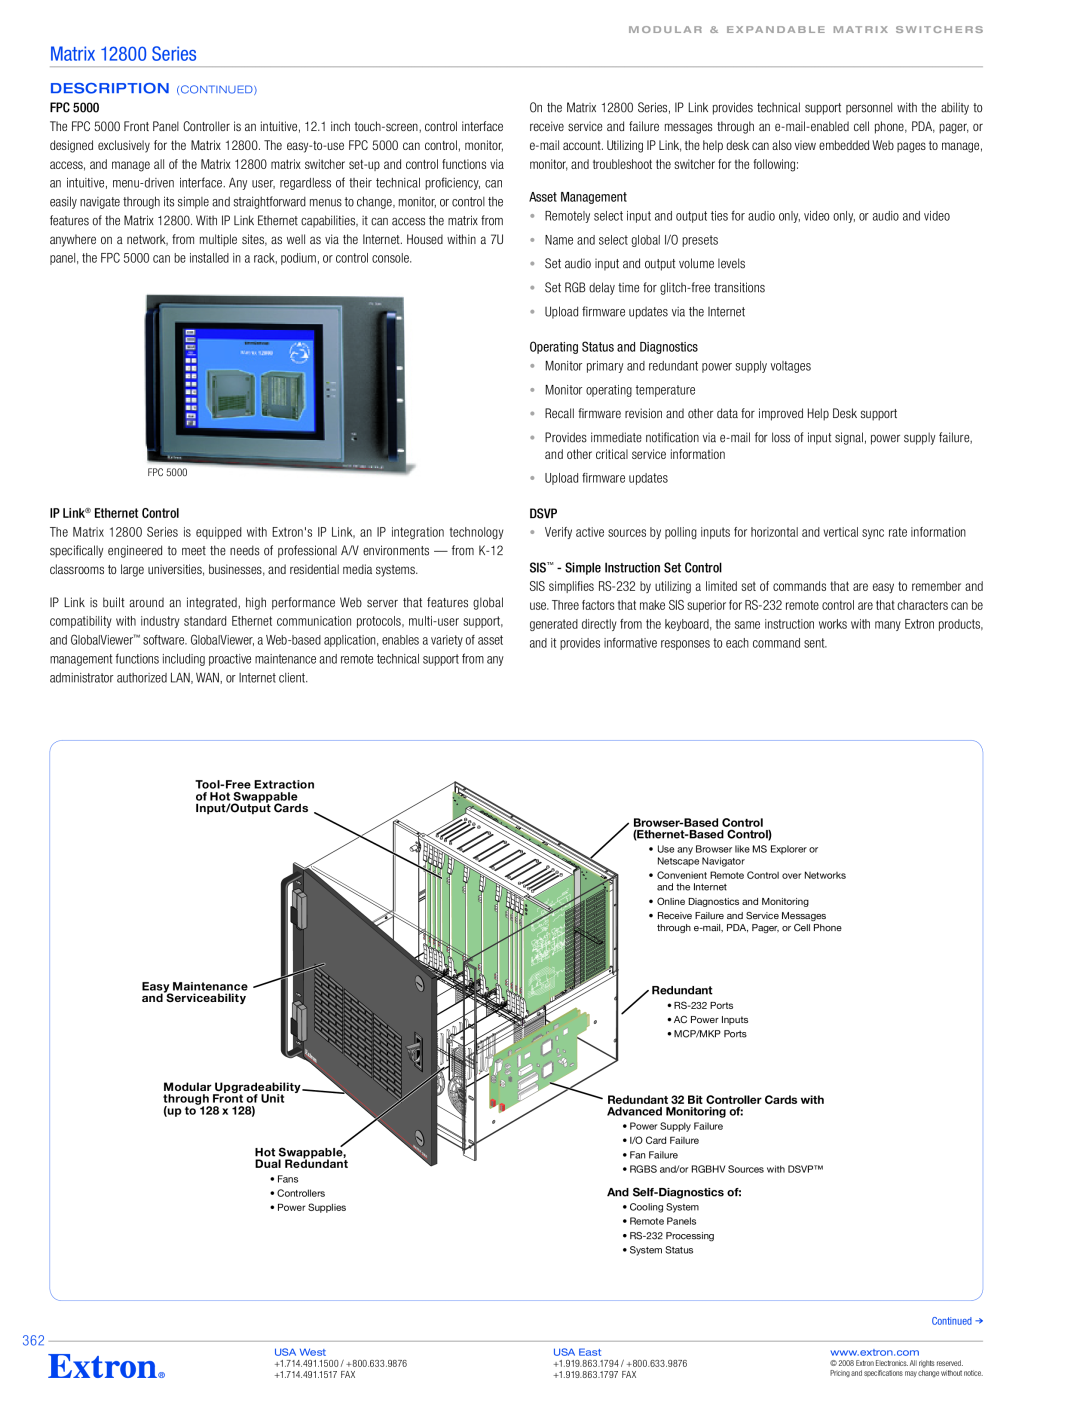 Extron electronic Matrix 12800 Series specifications Description continued 